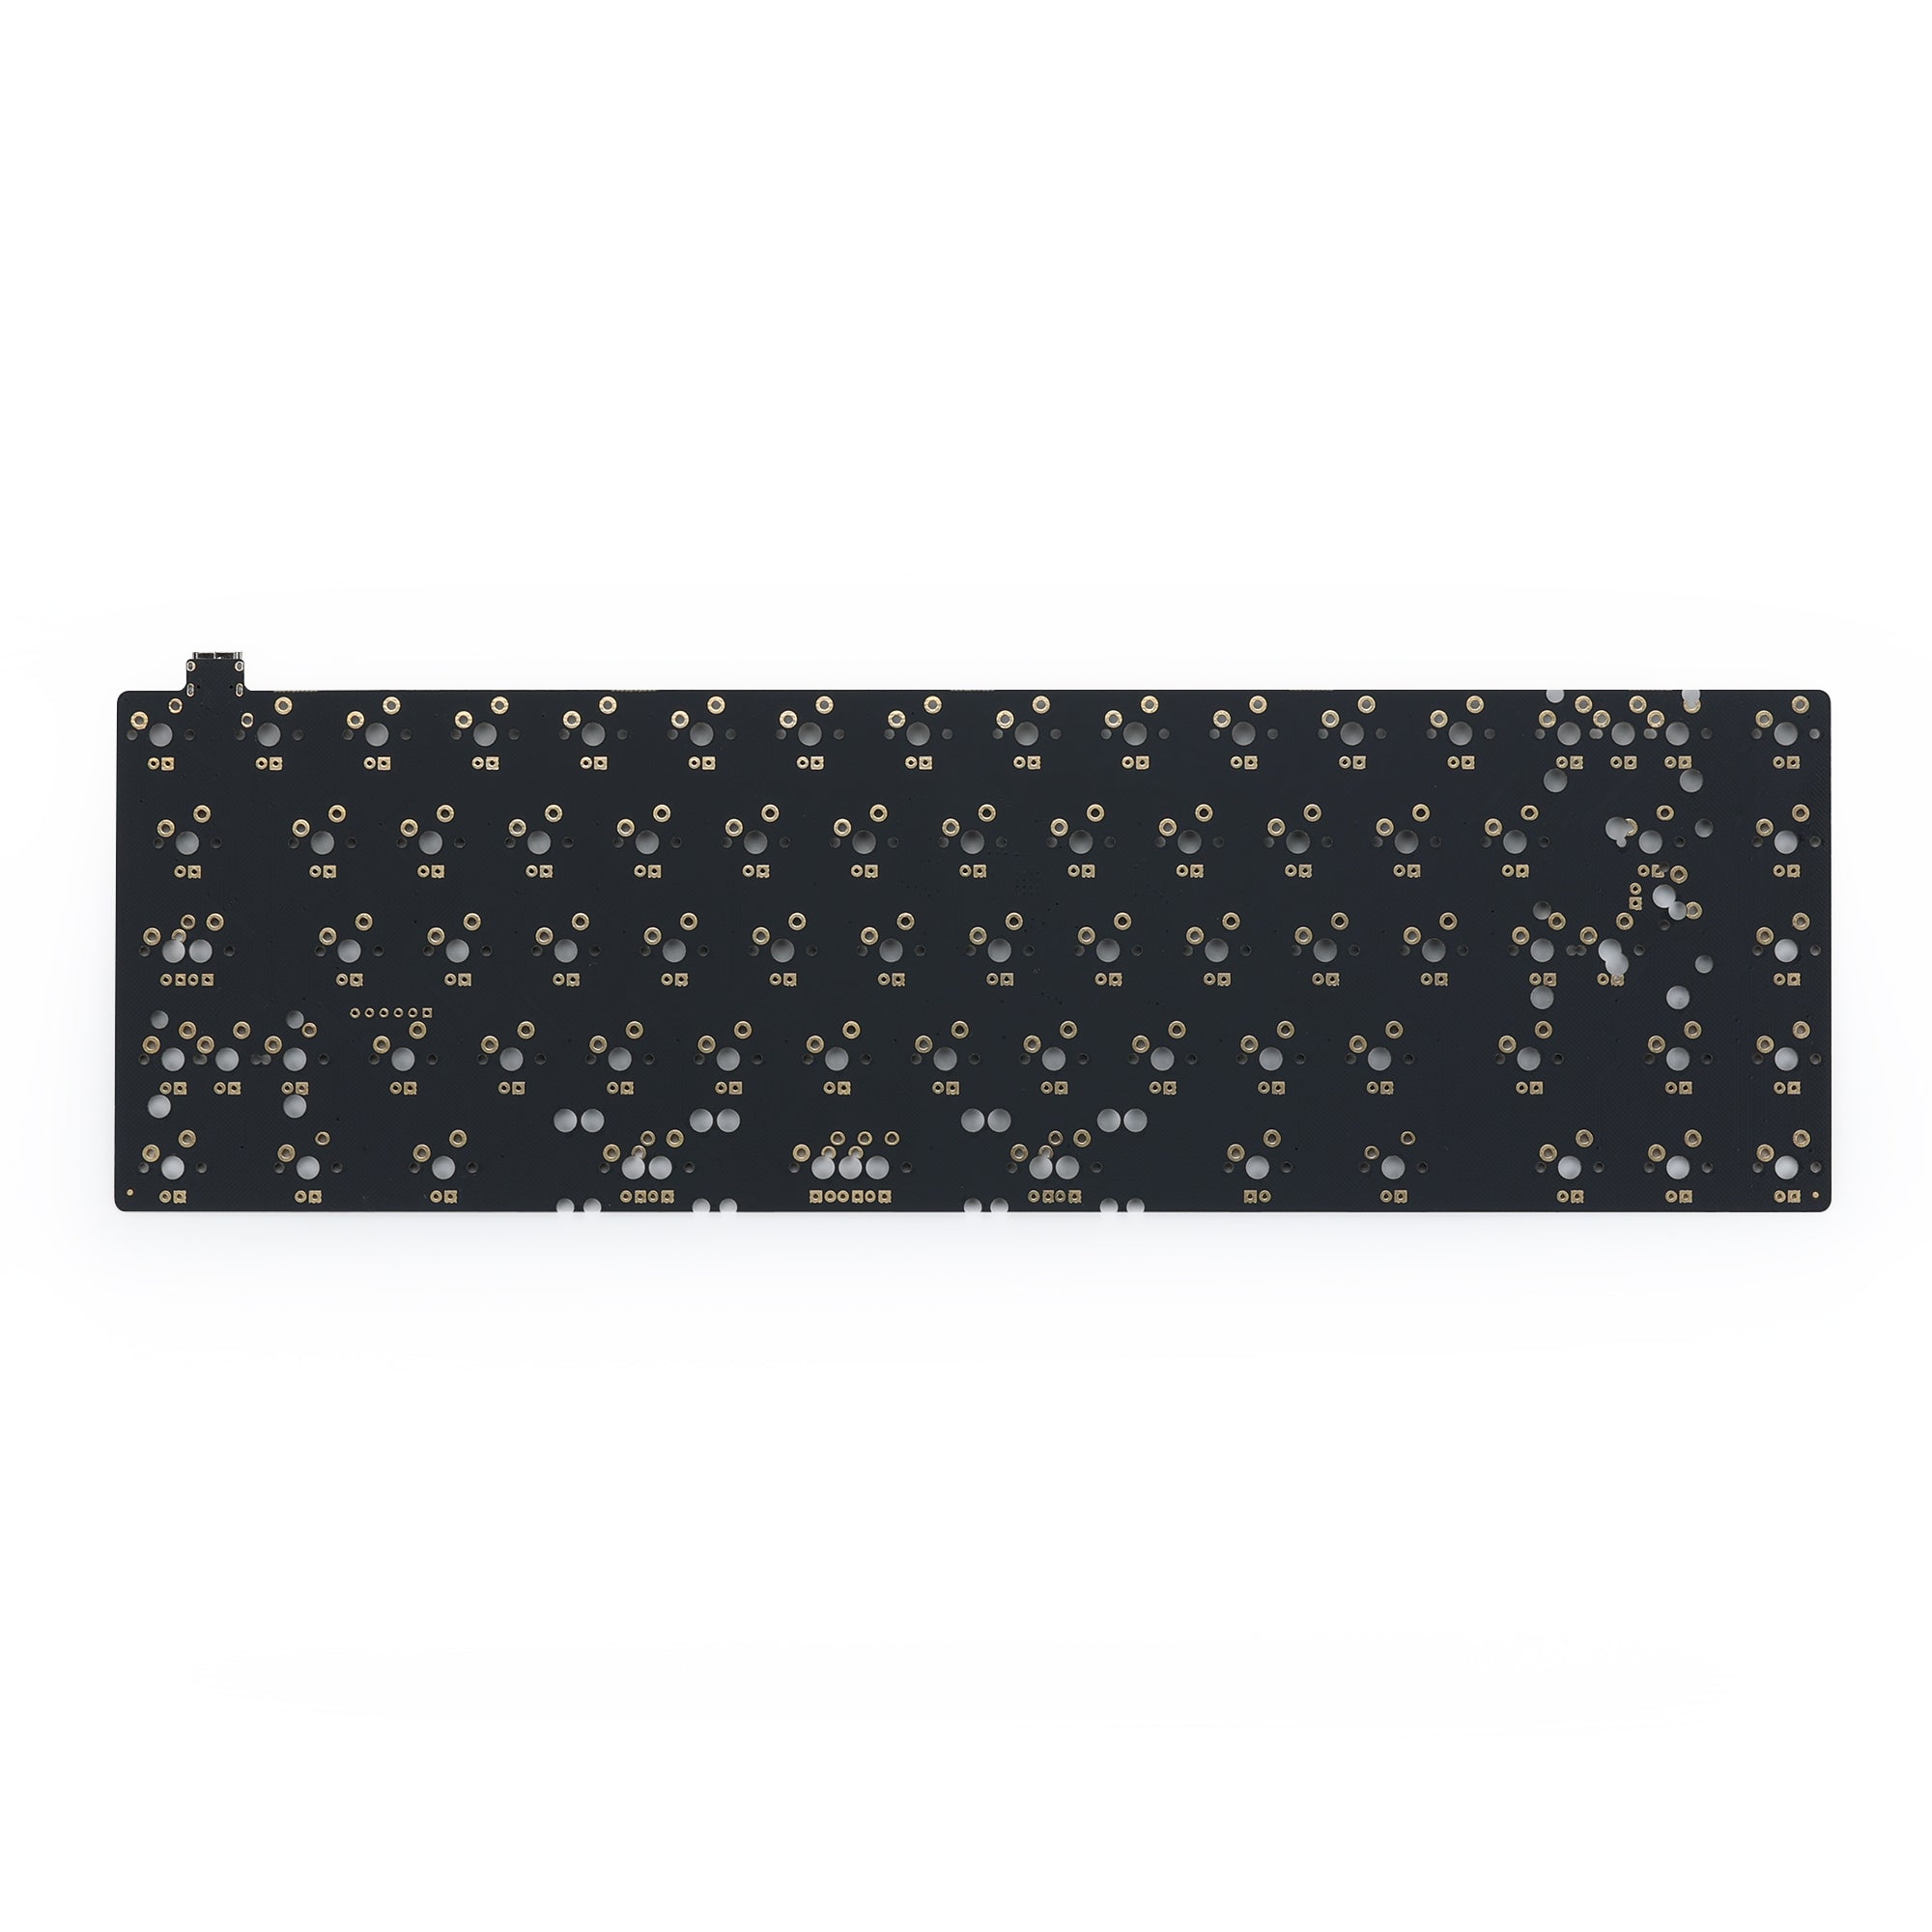 KBDfans Custom Keyboard KBD67 MarK II V3 Solderable PCB